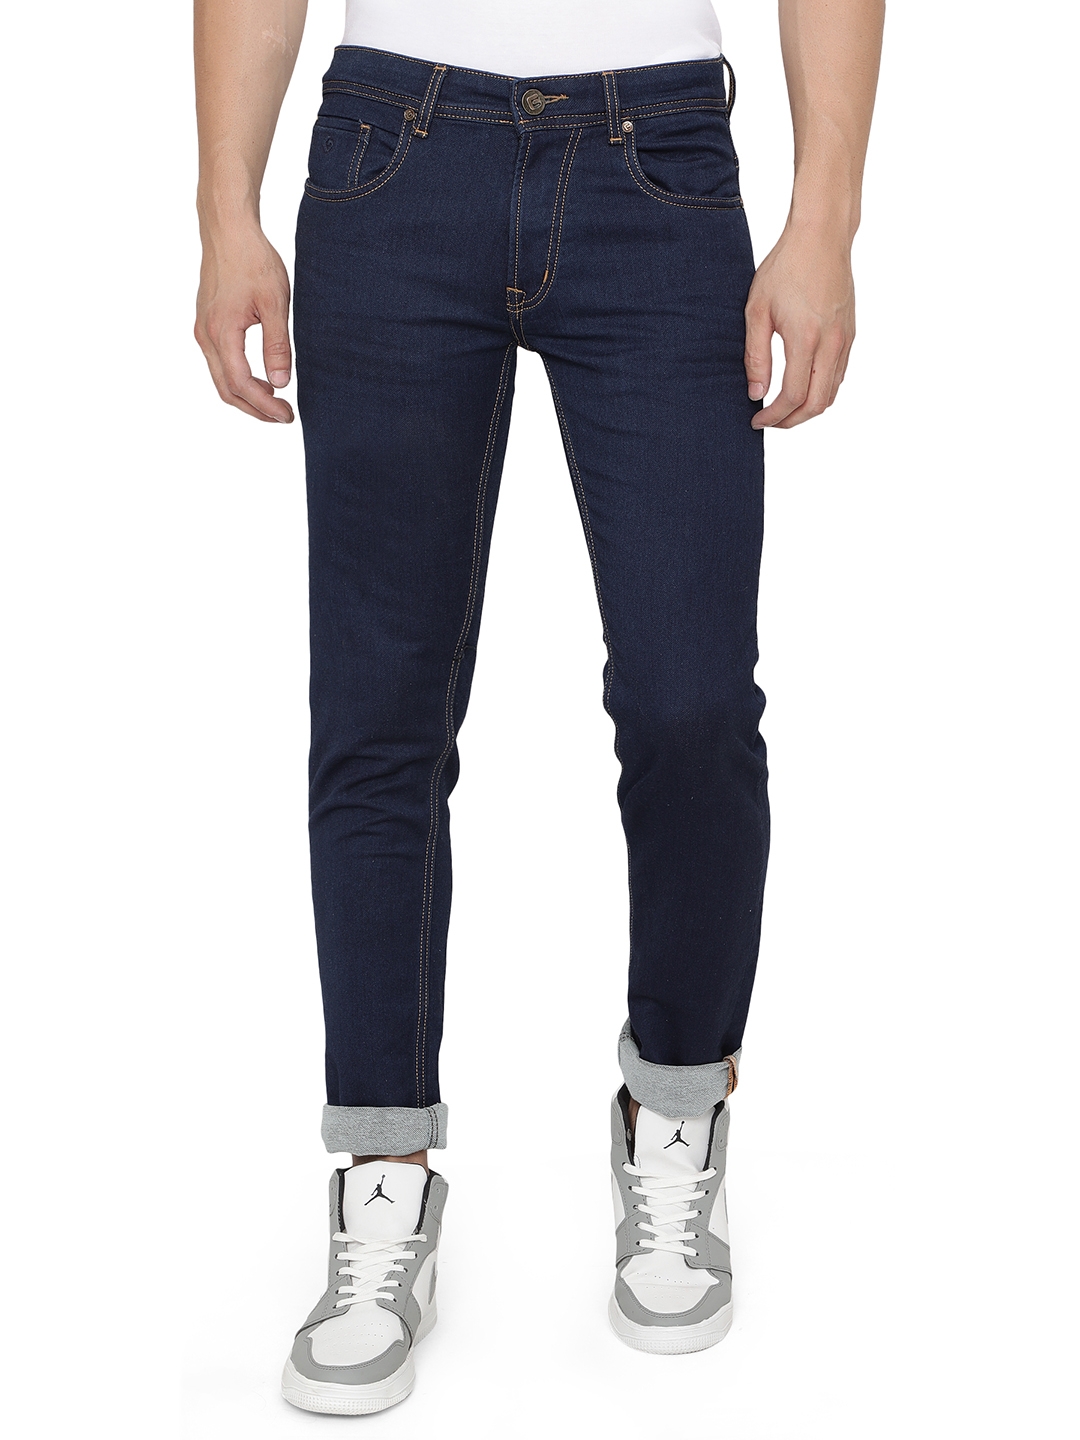 Greenfibre | Dark Indigo Blue Washed Narrow Fit Jeans | Greenfibre